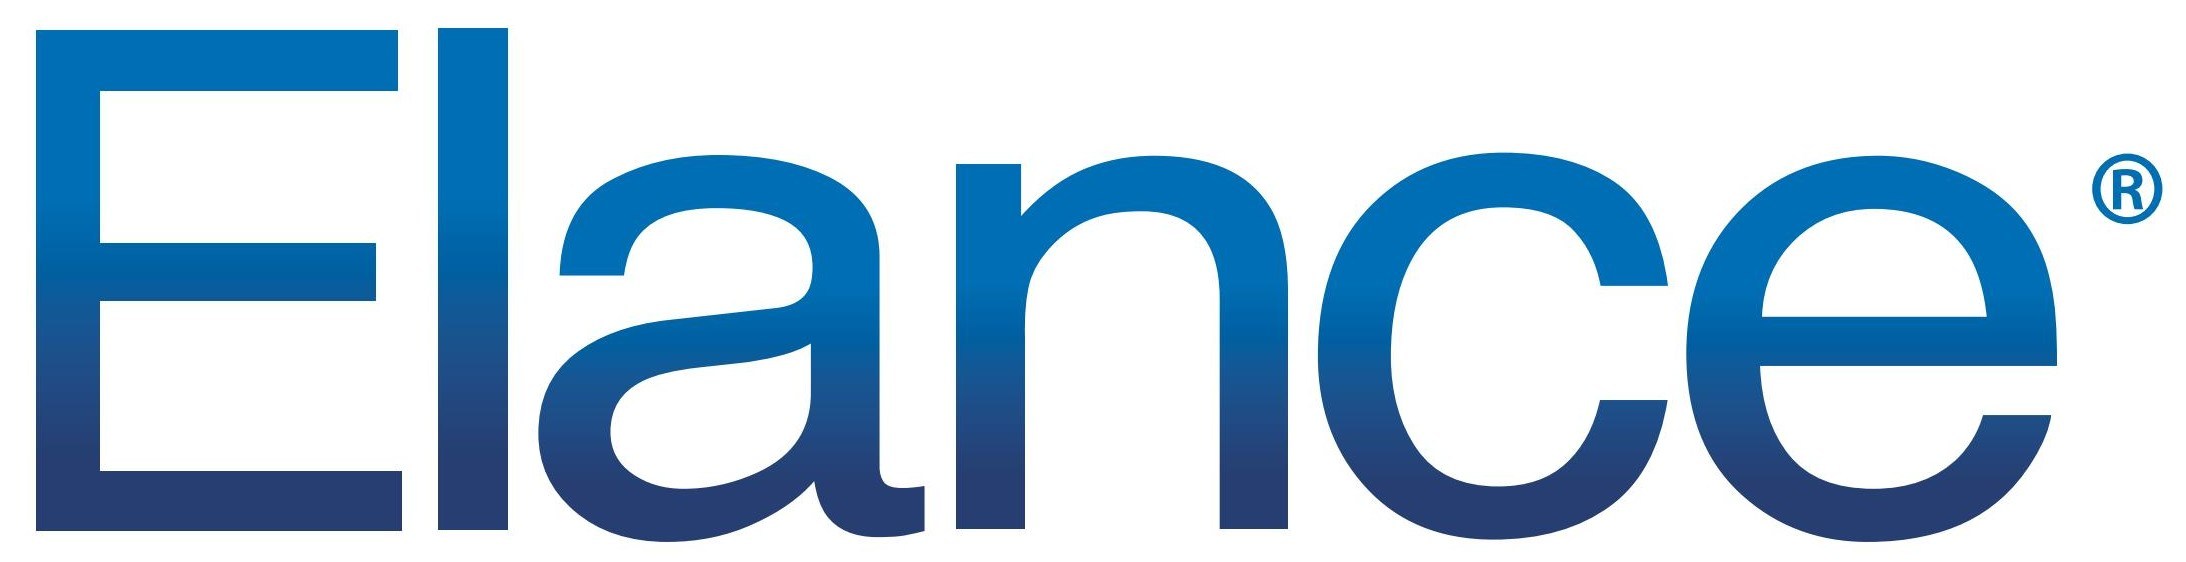 Elance Logo [PDF]